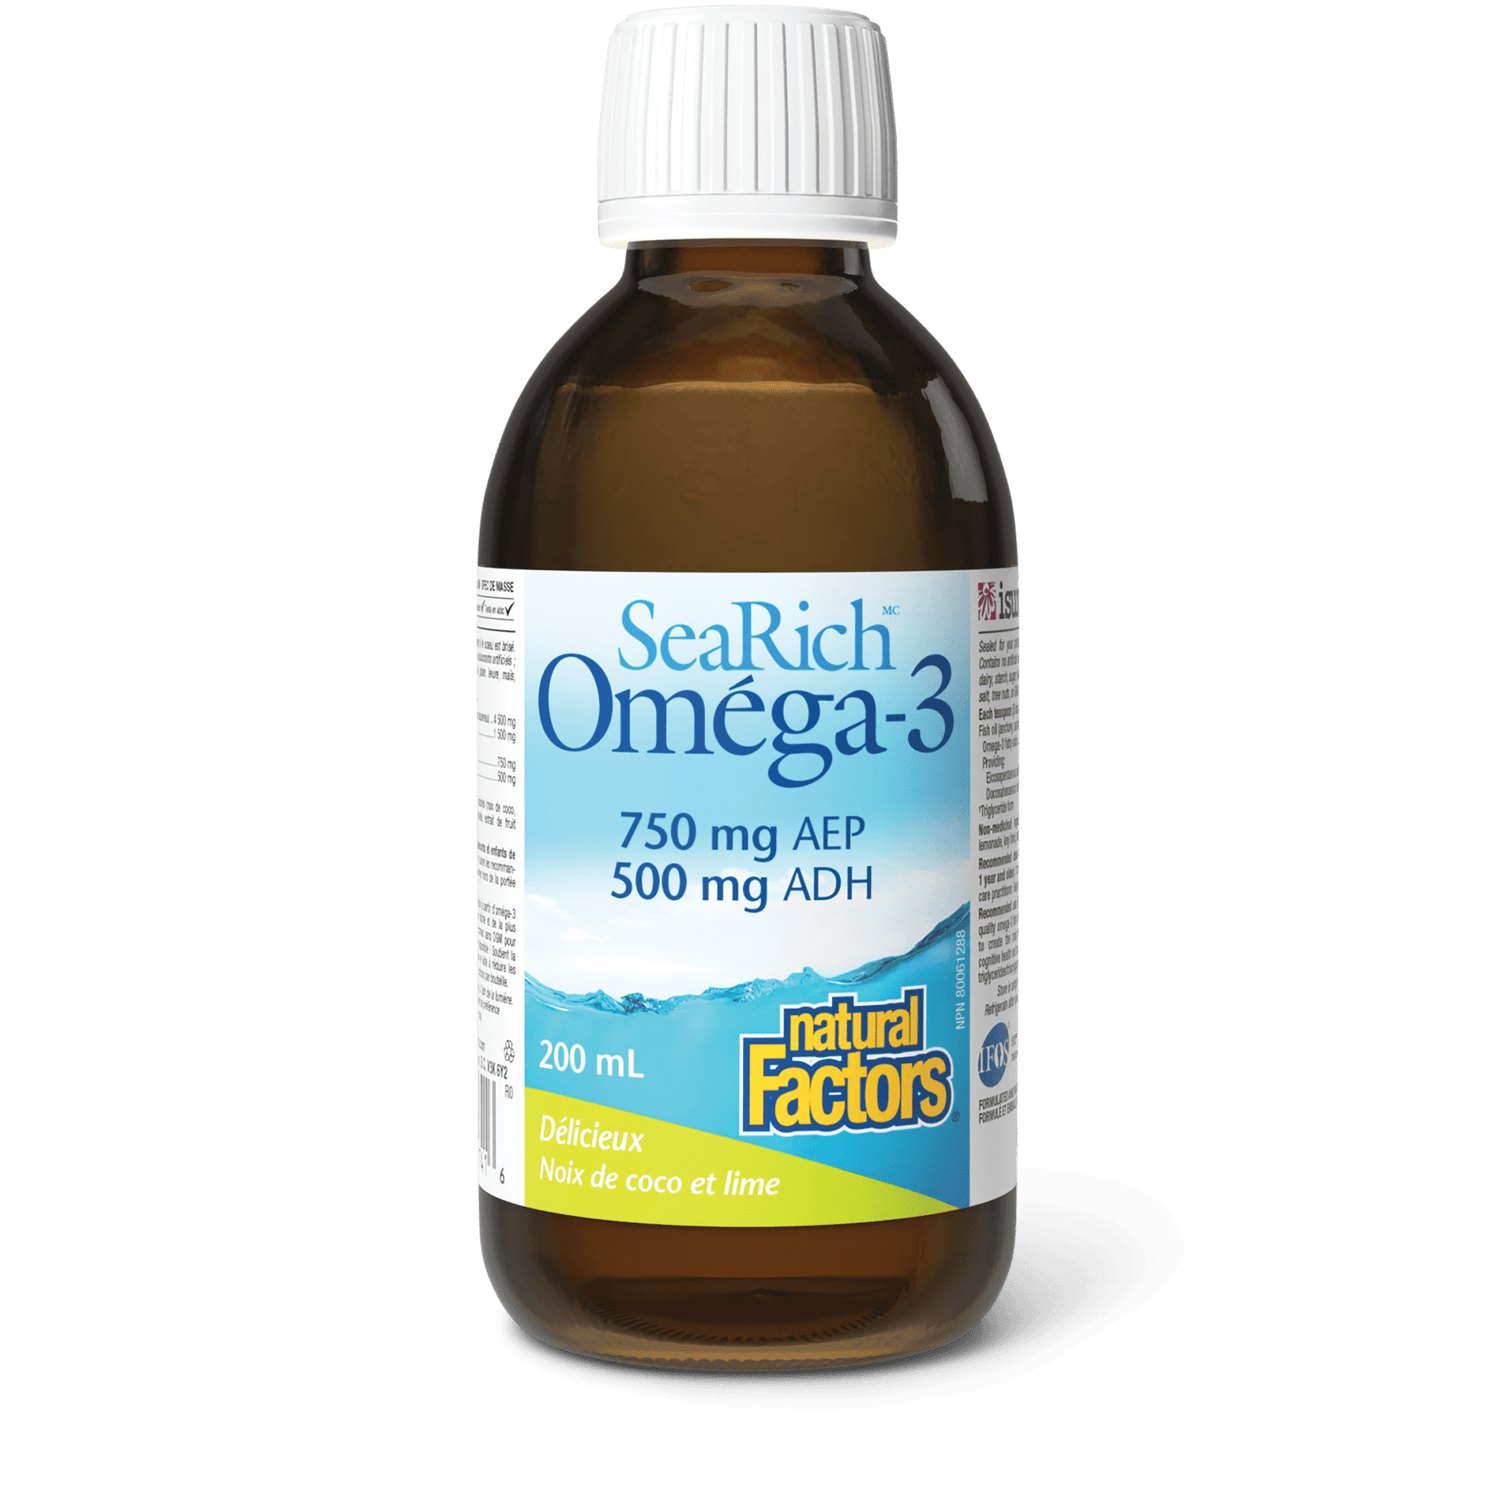 Oméga-3 750 mg AEP/500 mg ADH, noix de coco et lime, SeaRich, Natural Factors|v|image|35741